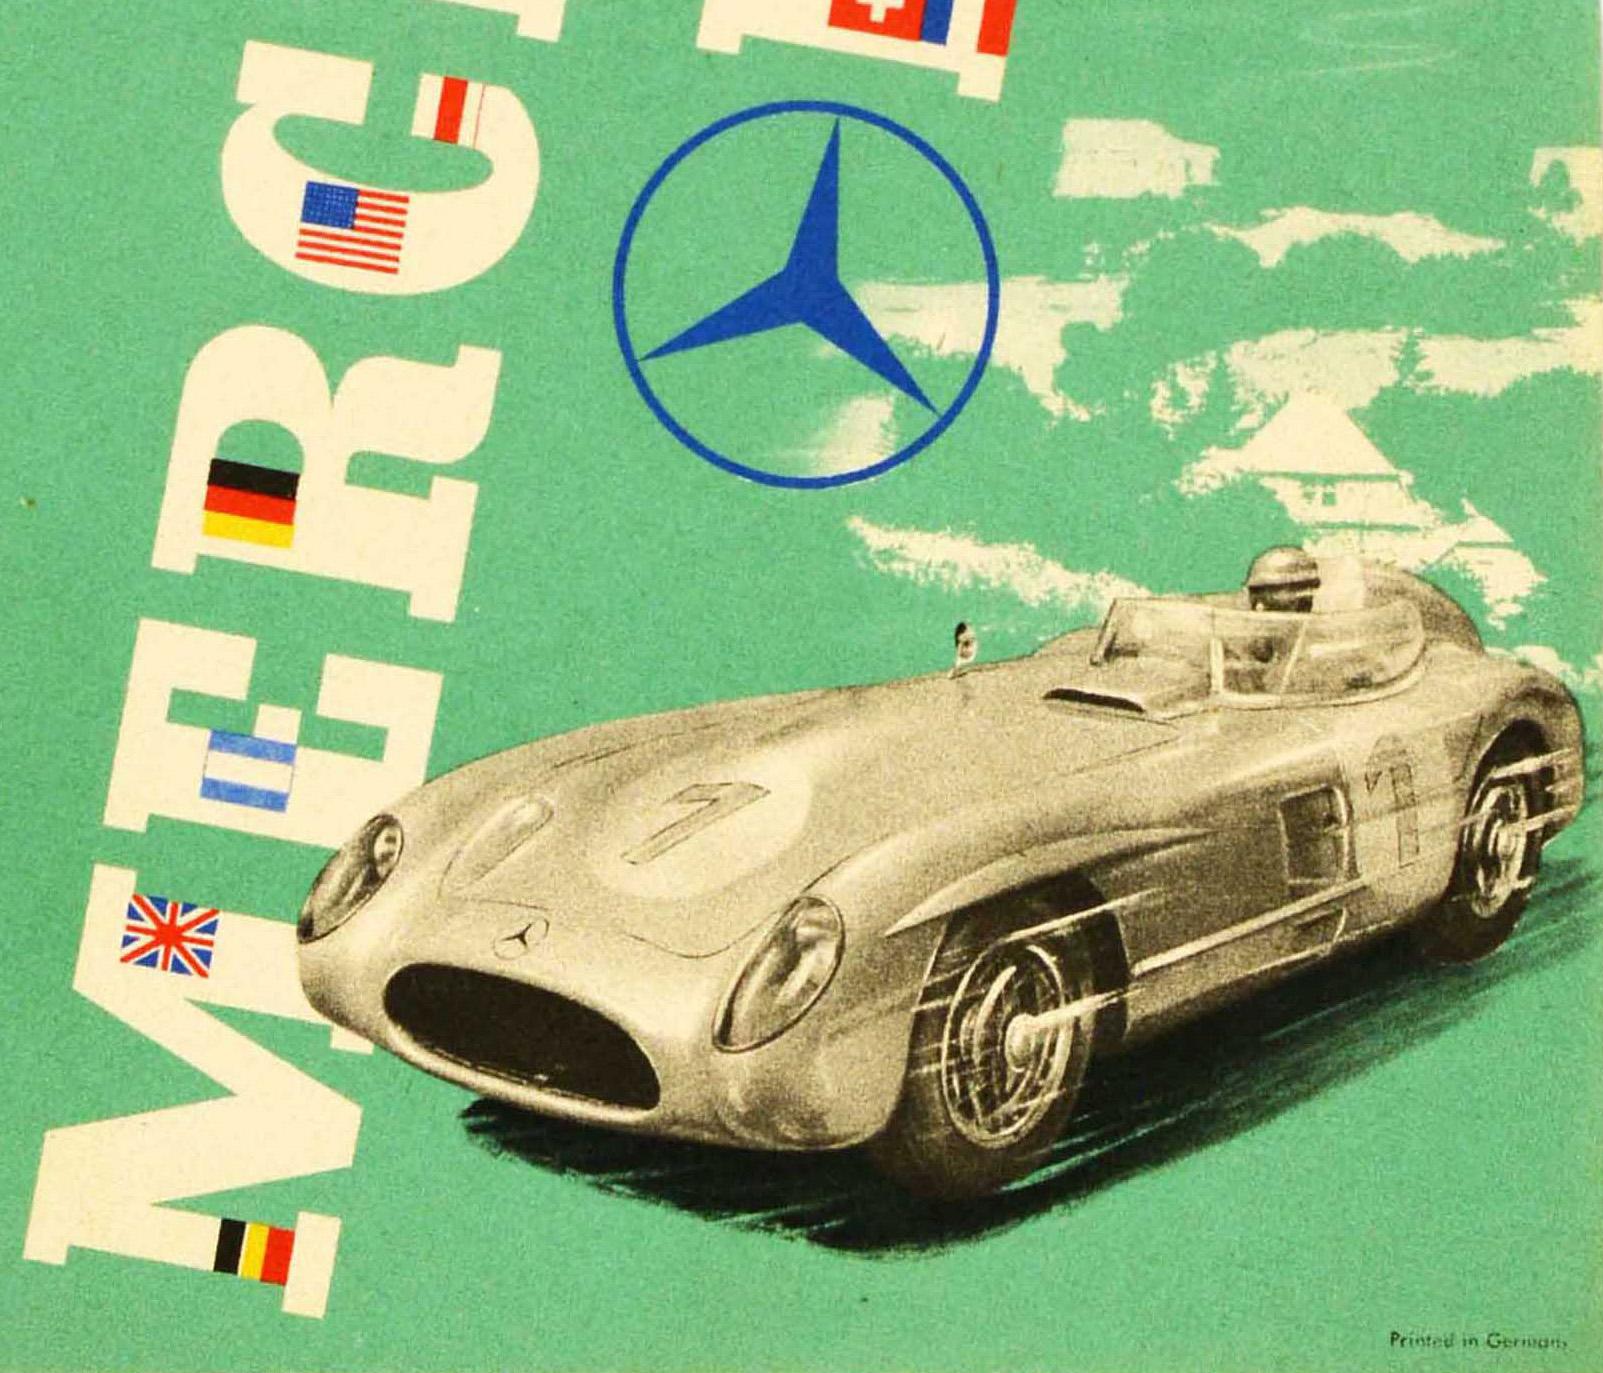 Original vintage motorsport poster celebrating the Mercedes-Benz victory at the XVIII Internat. ADAC Eifelrennen 1955 der Sportwagen (300 SLR) won by the world champion Juan Manuel Fangio in first place 2. Stirling Moss 4. Karl Kling featuring a